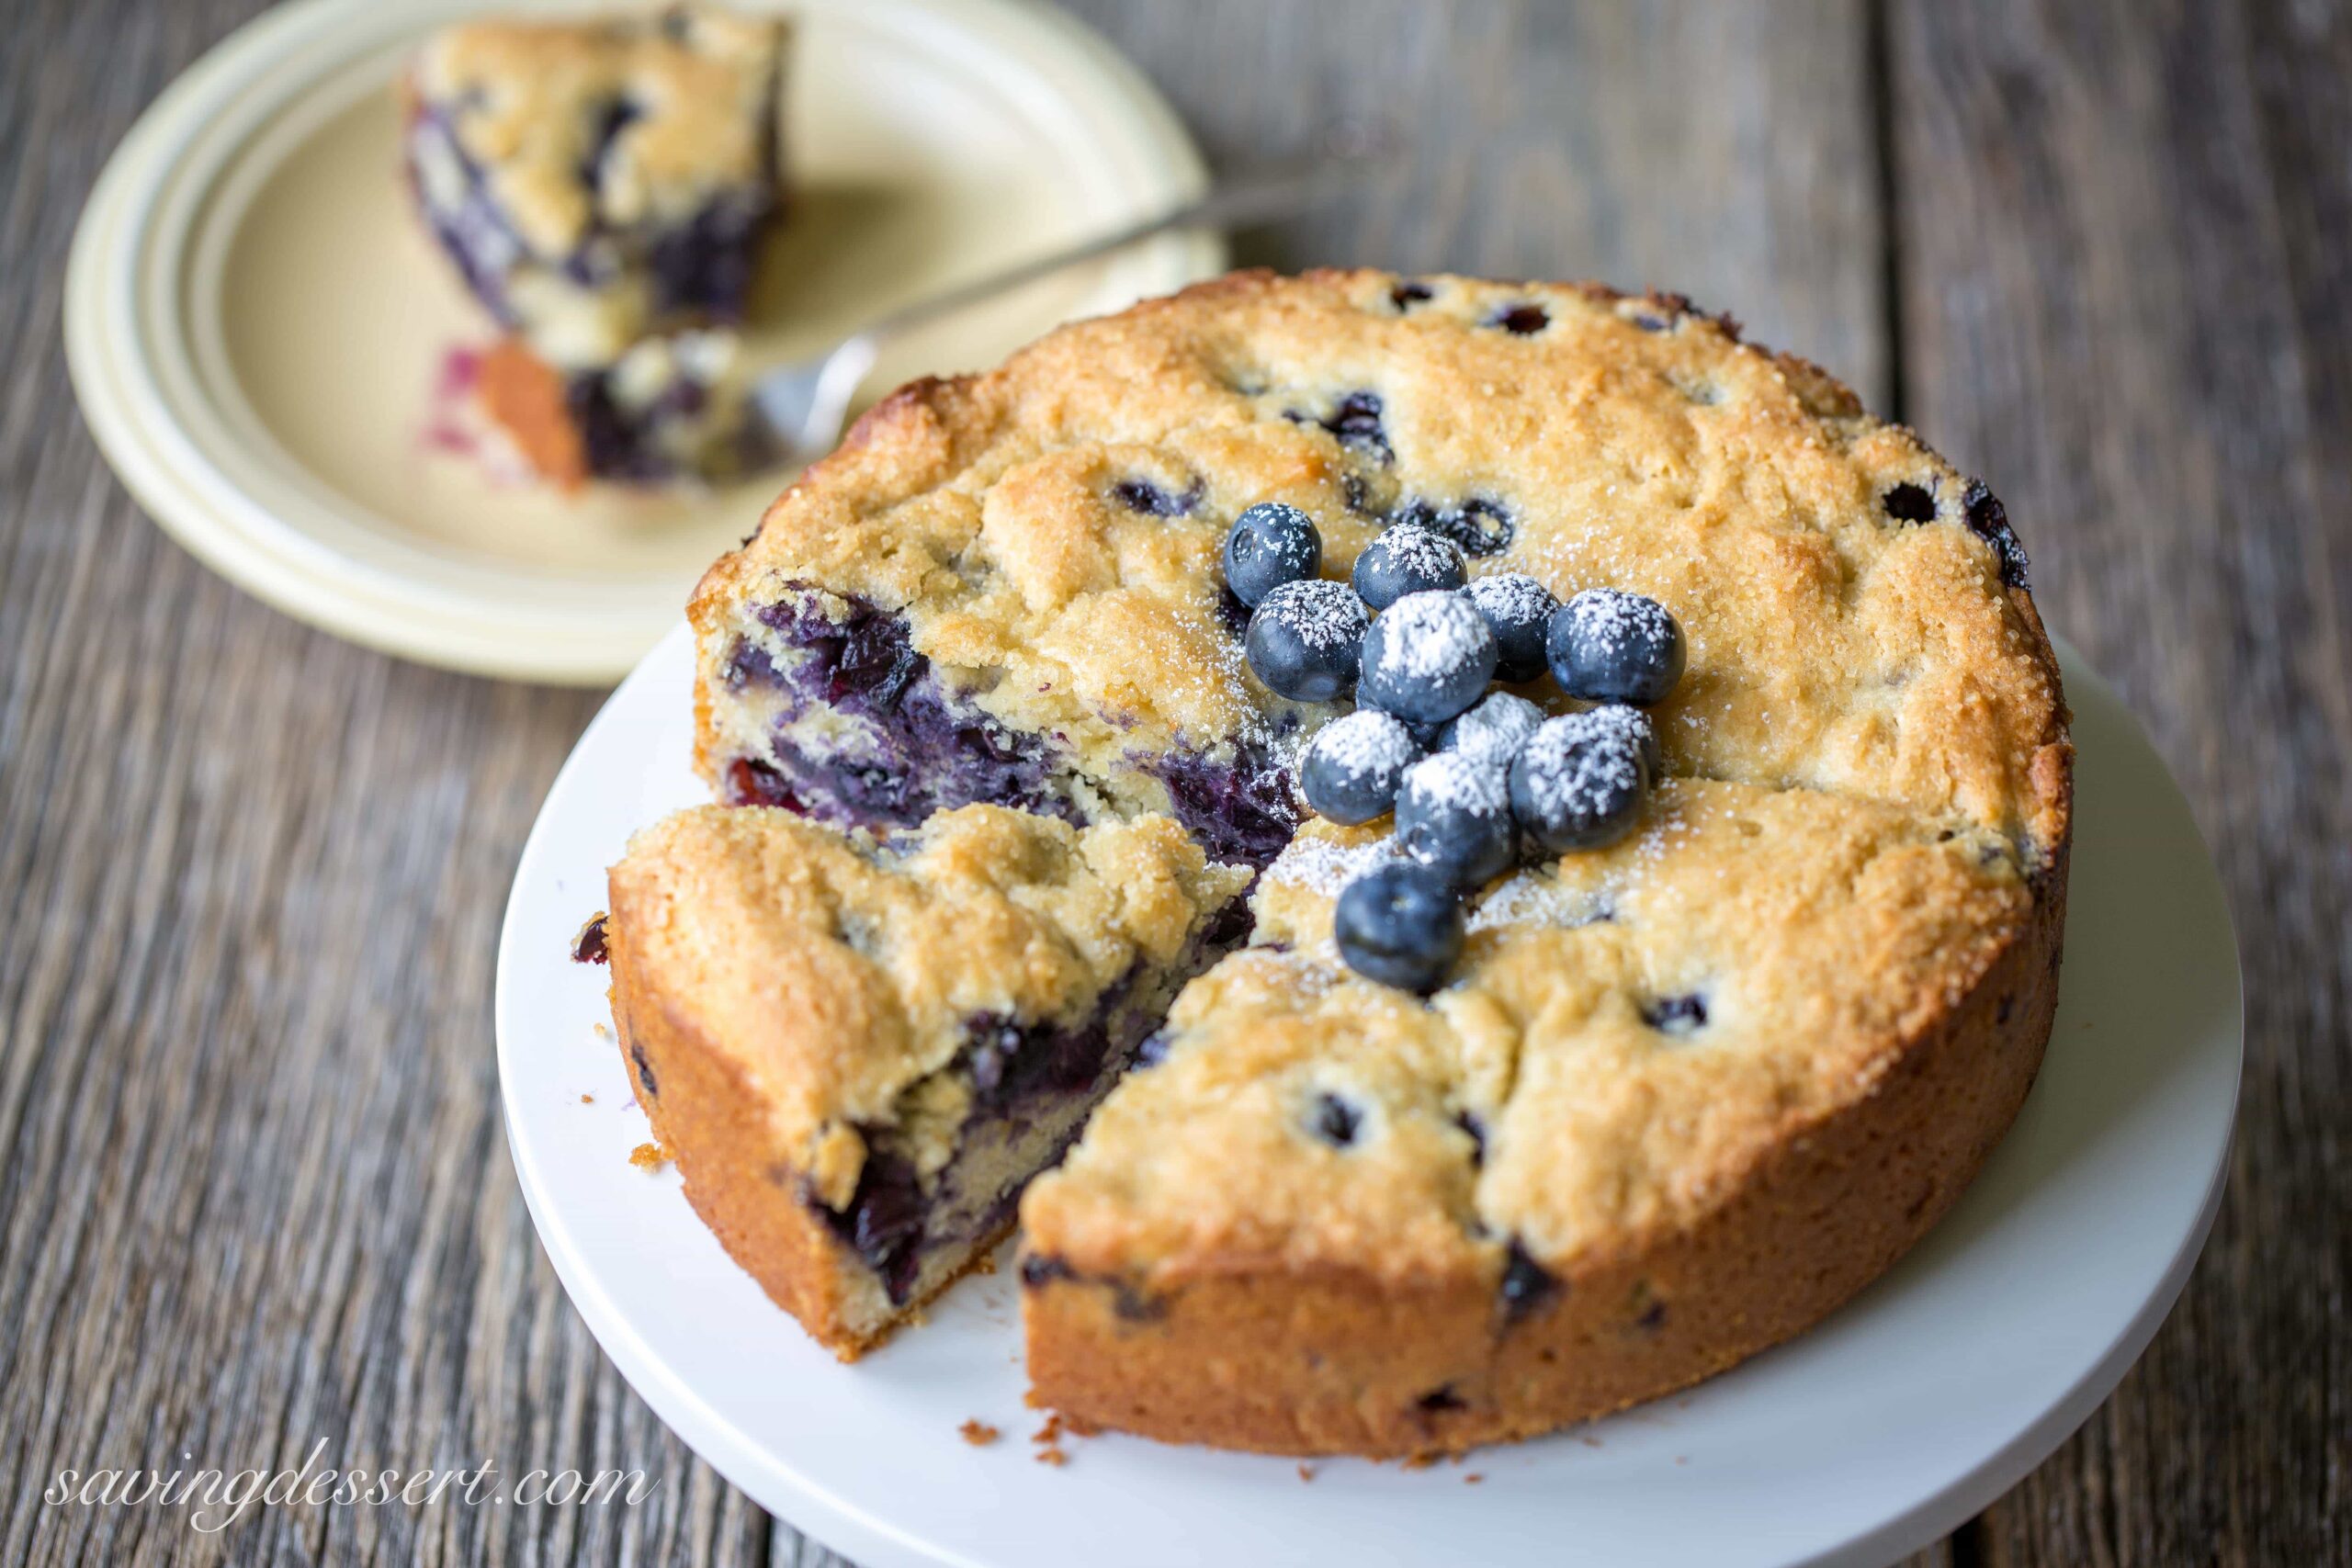 https://www.savingdessert.com/wp-content/uploads/2015/05/Blueberry-Breakfast-Cake-7-scaled.jpg